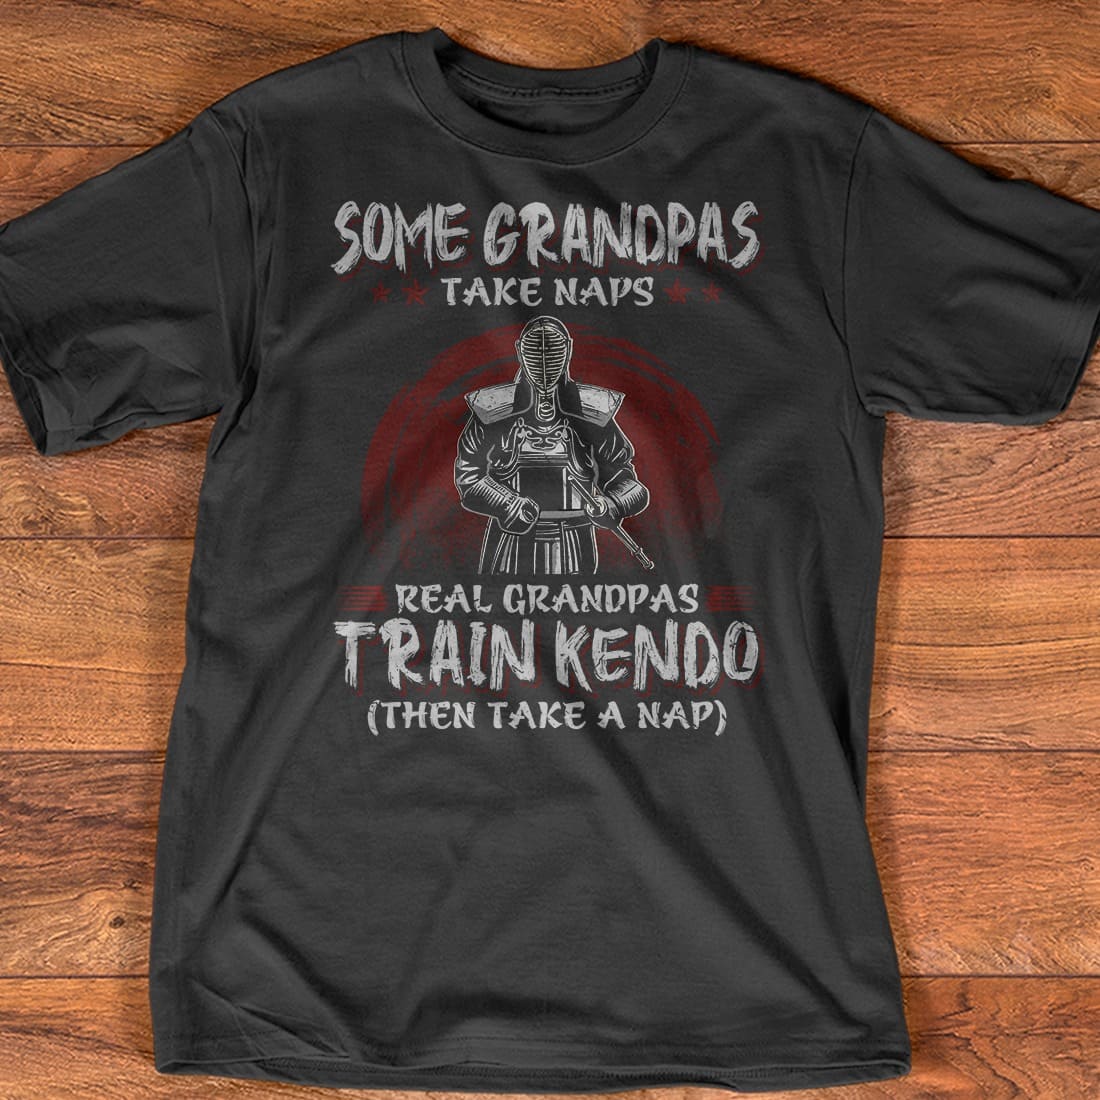 Some grandpas take naps real grandpas train kendo - Japan kendo training, T-shirt for grandpa